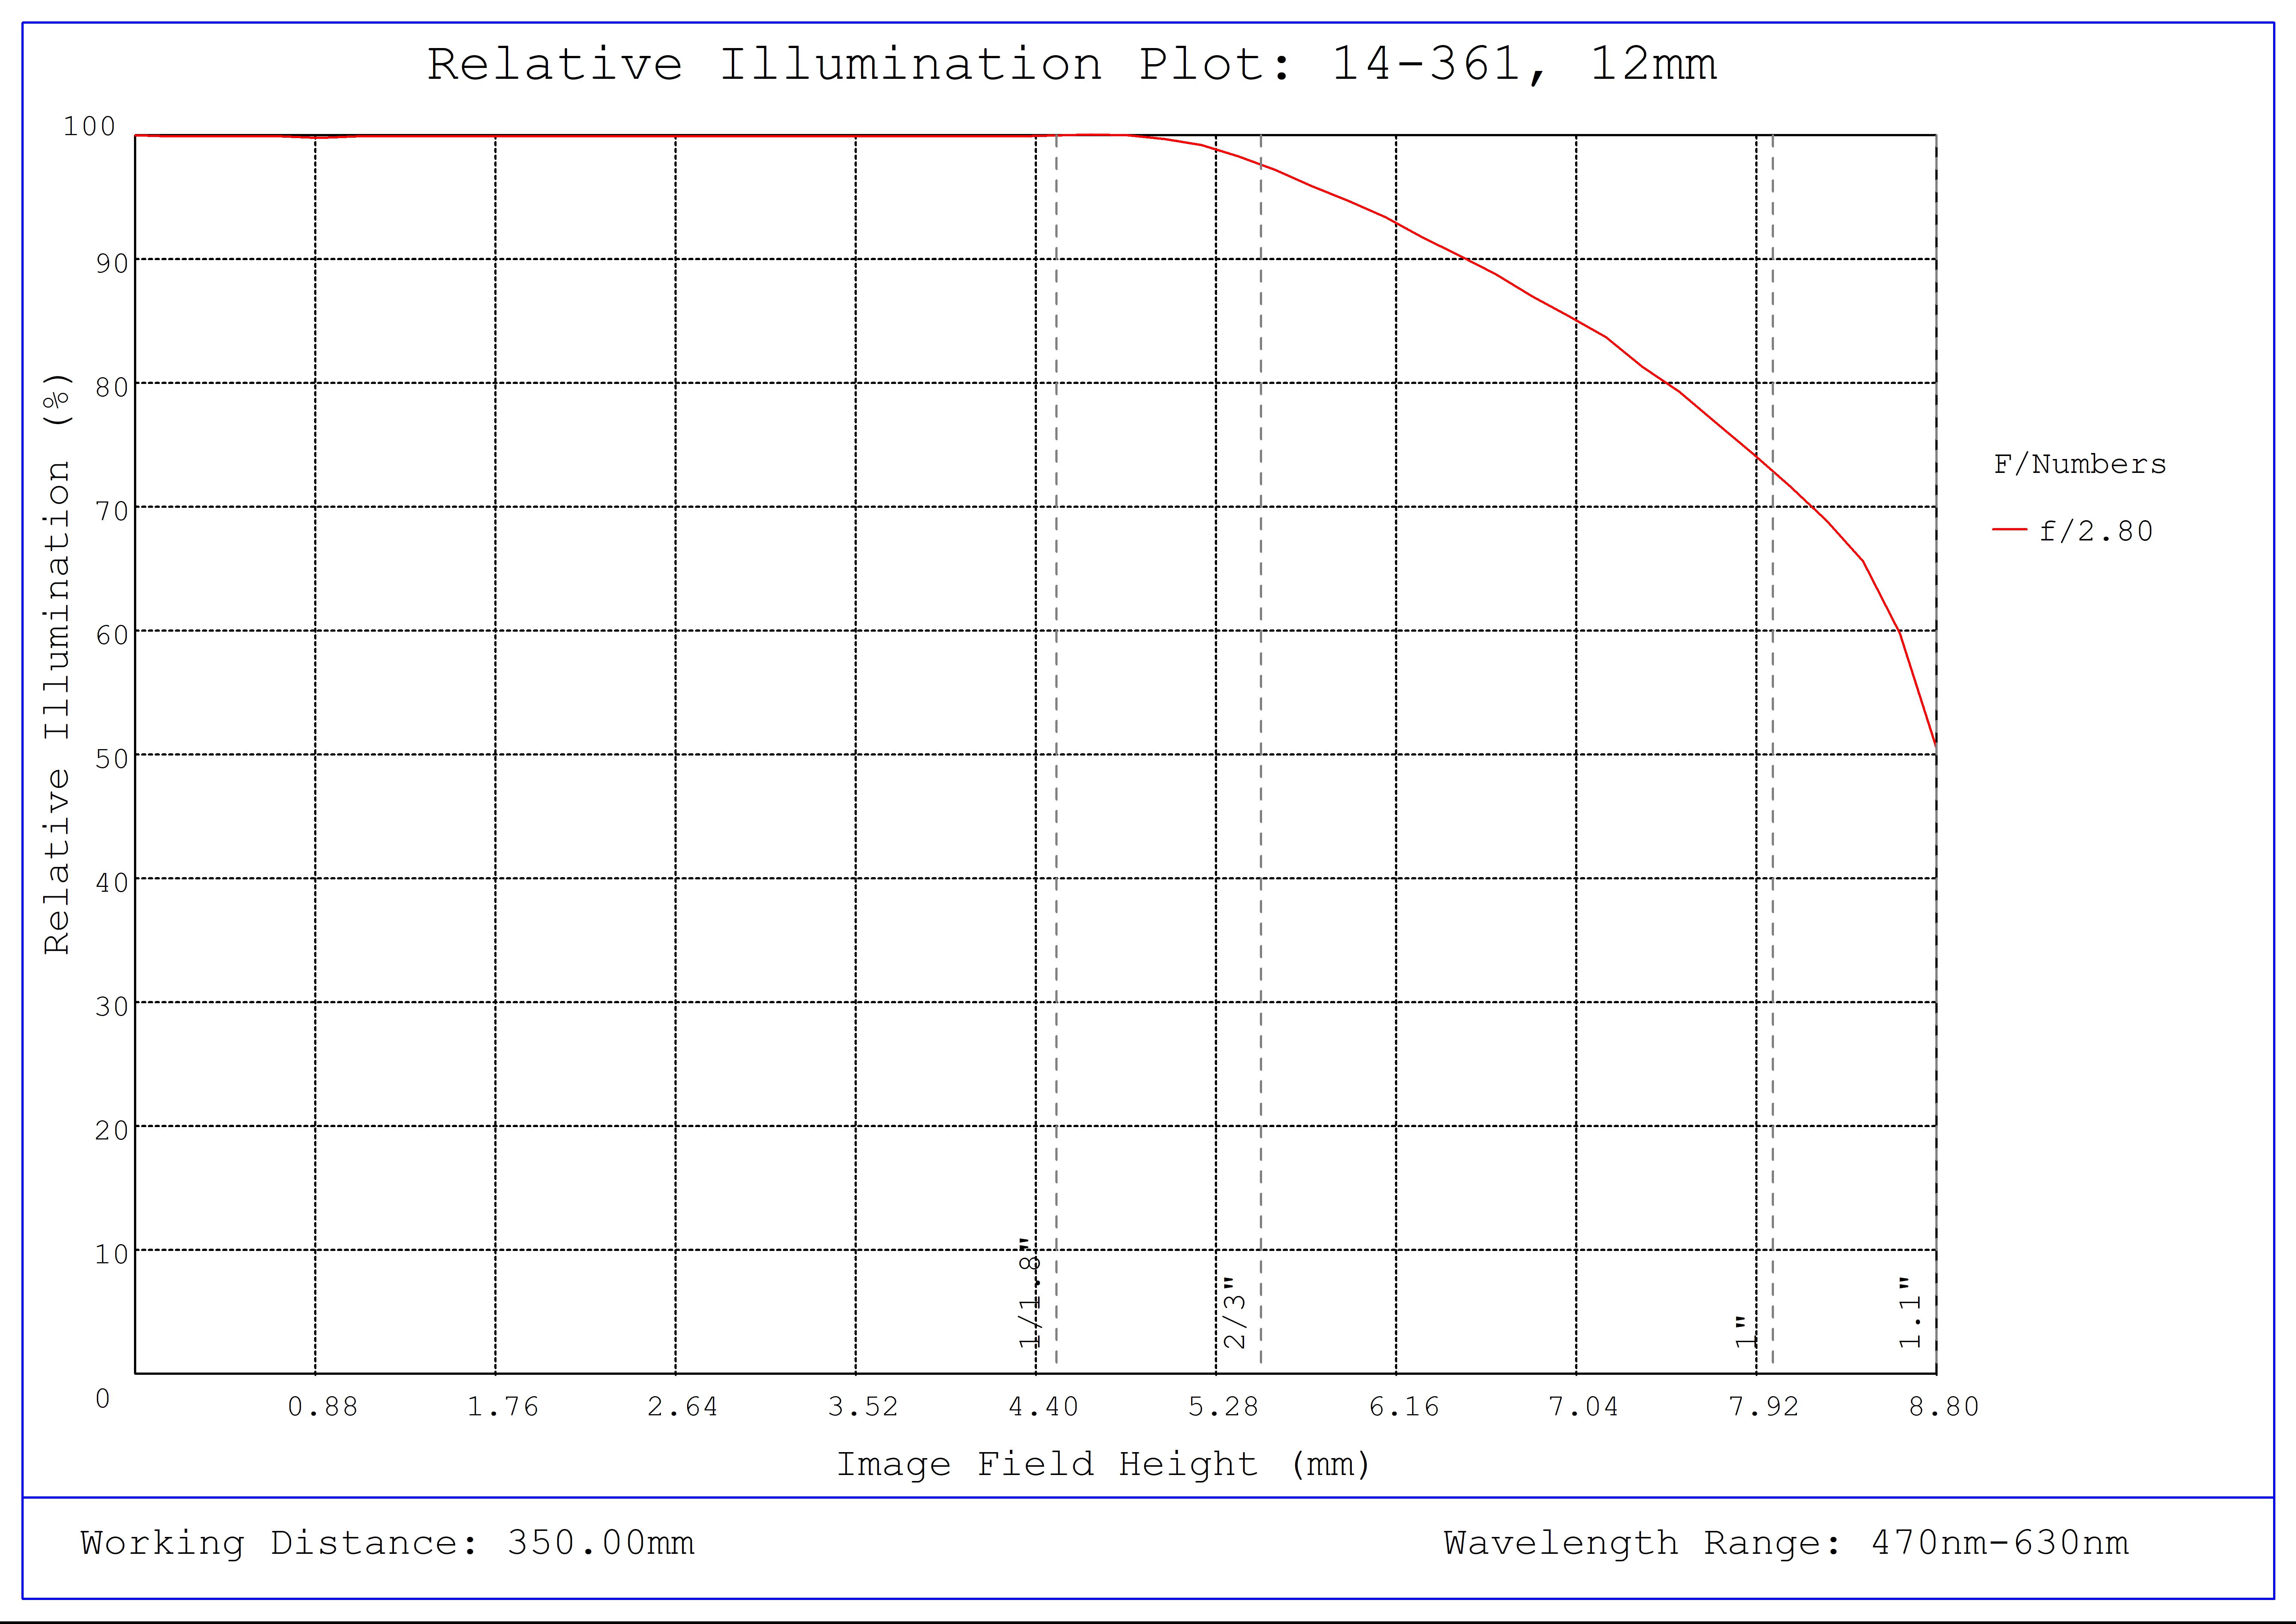 #14-361, 12mm LT Series Fixed Focal Length Lens, Relative Illumination Plot